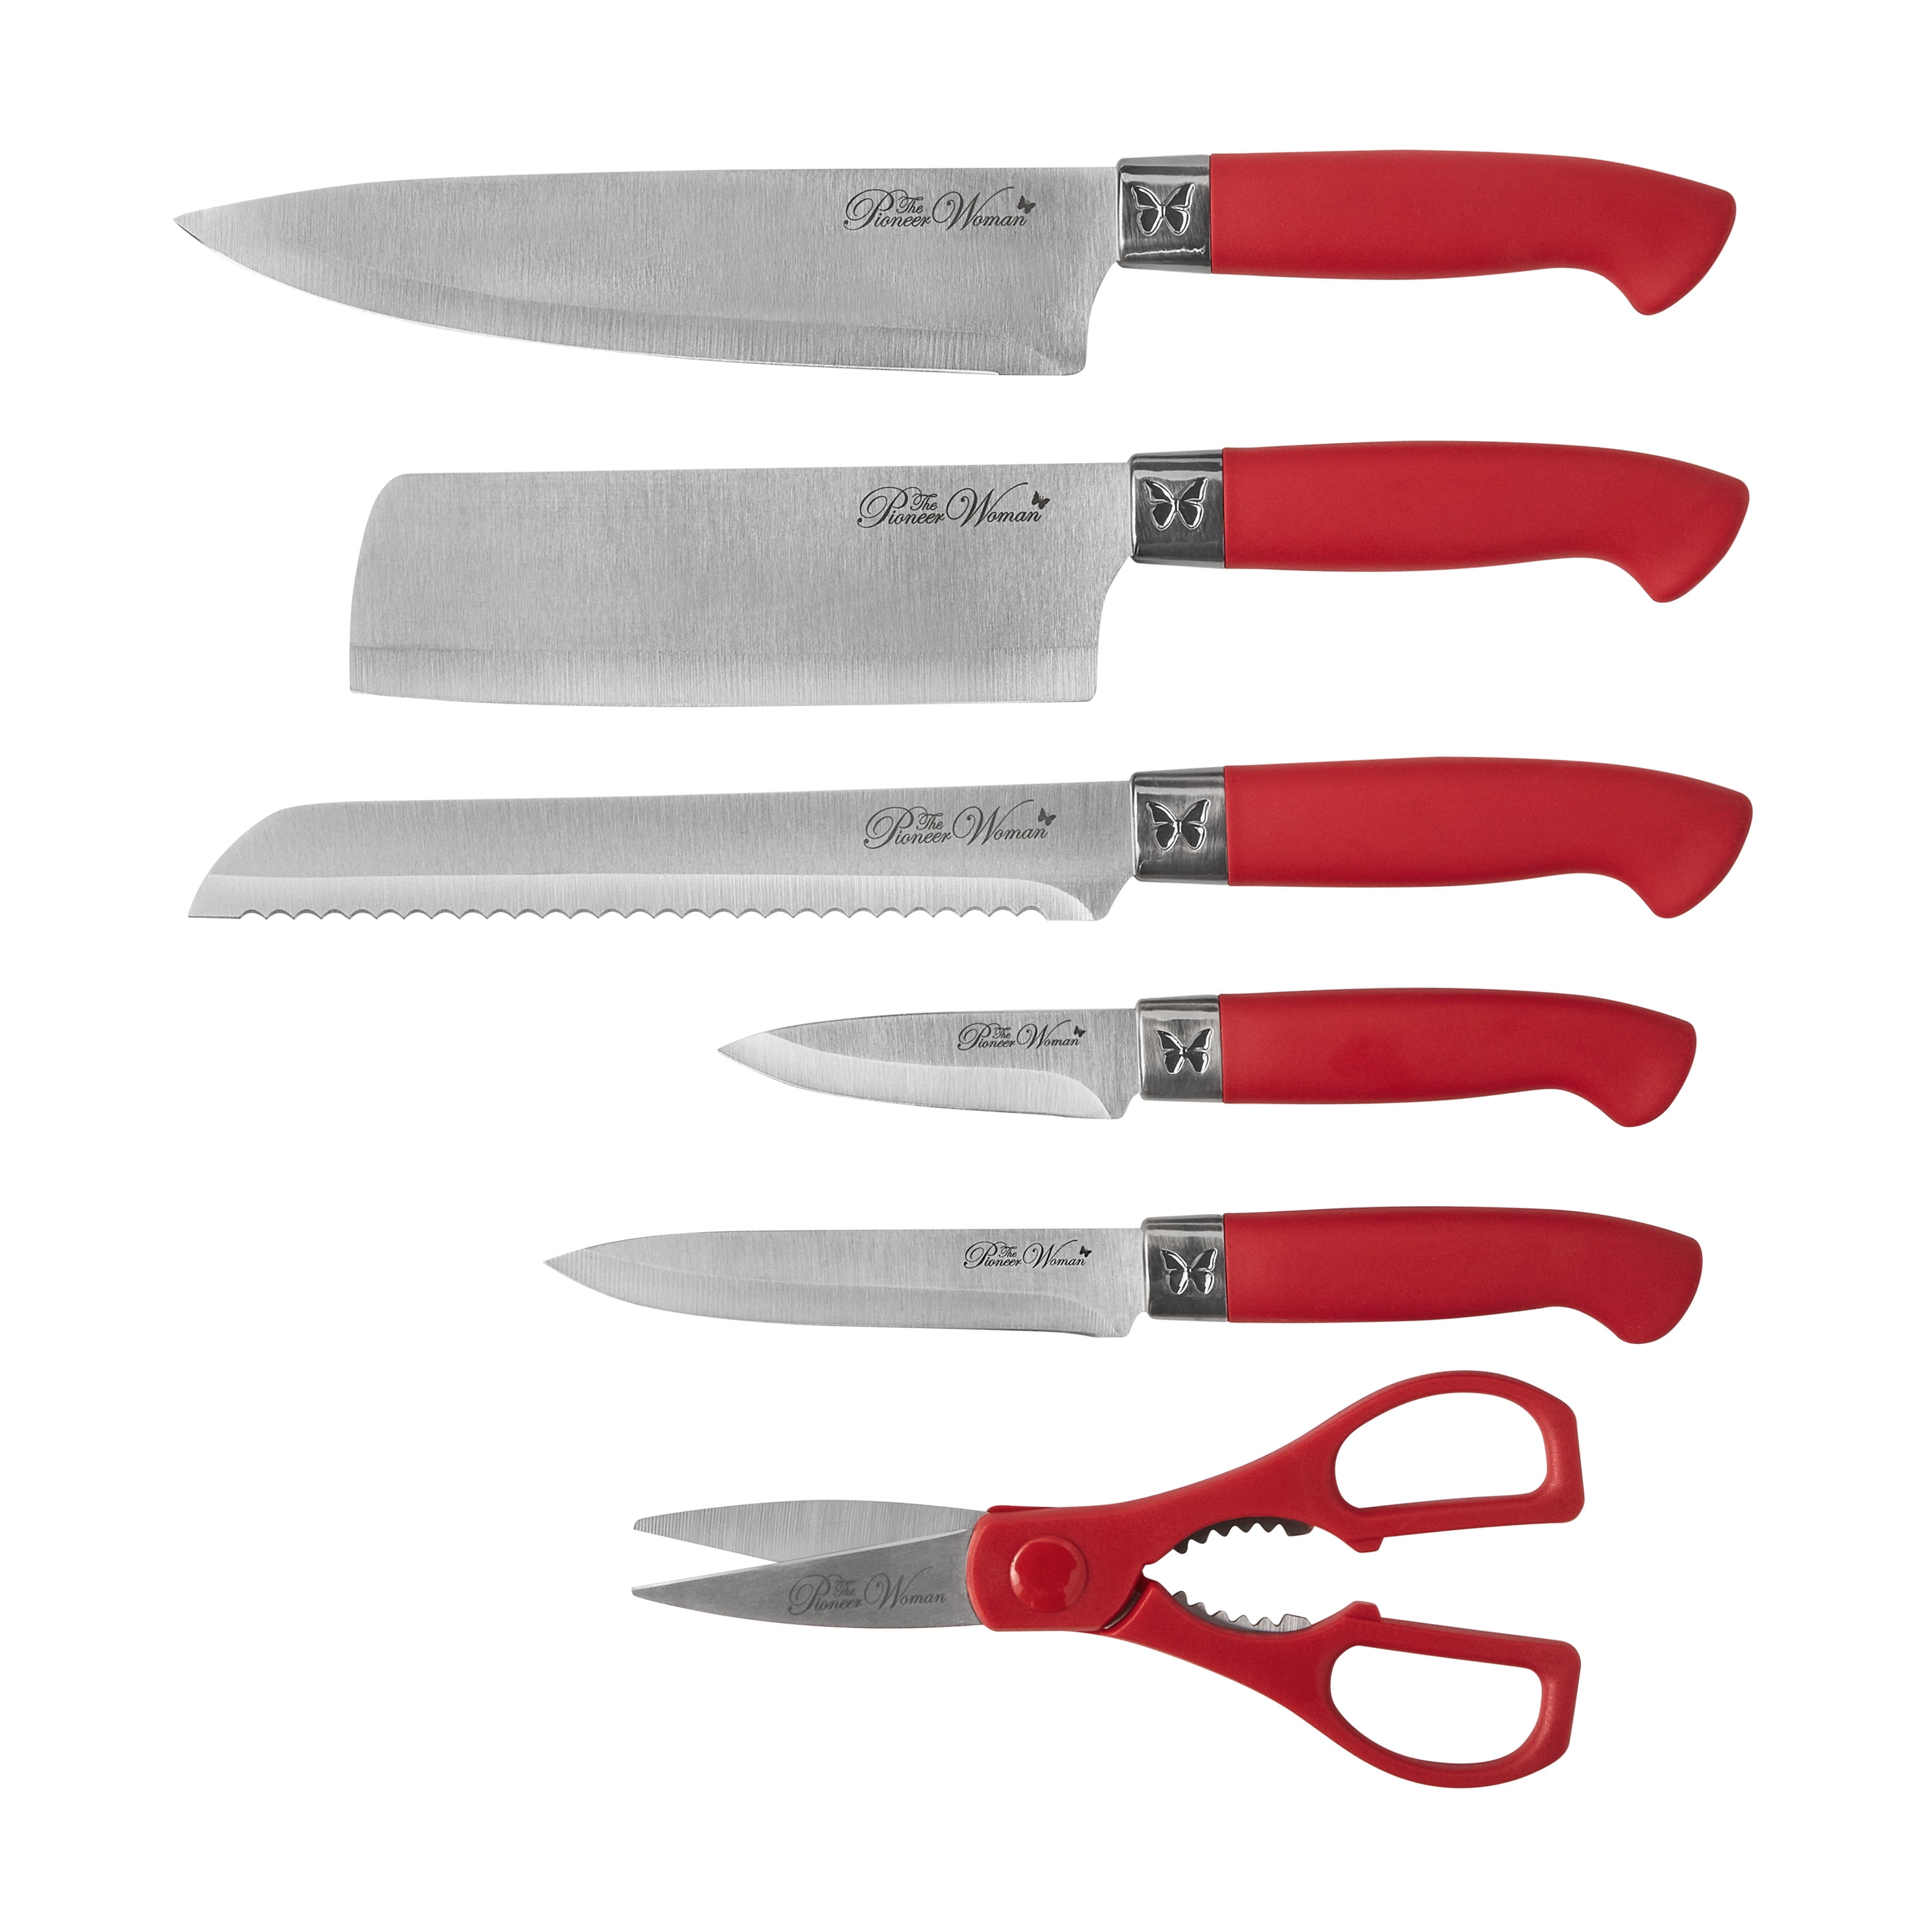 11 Piece Cutlery knife set, Black ABS